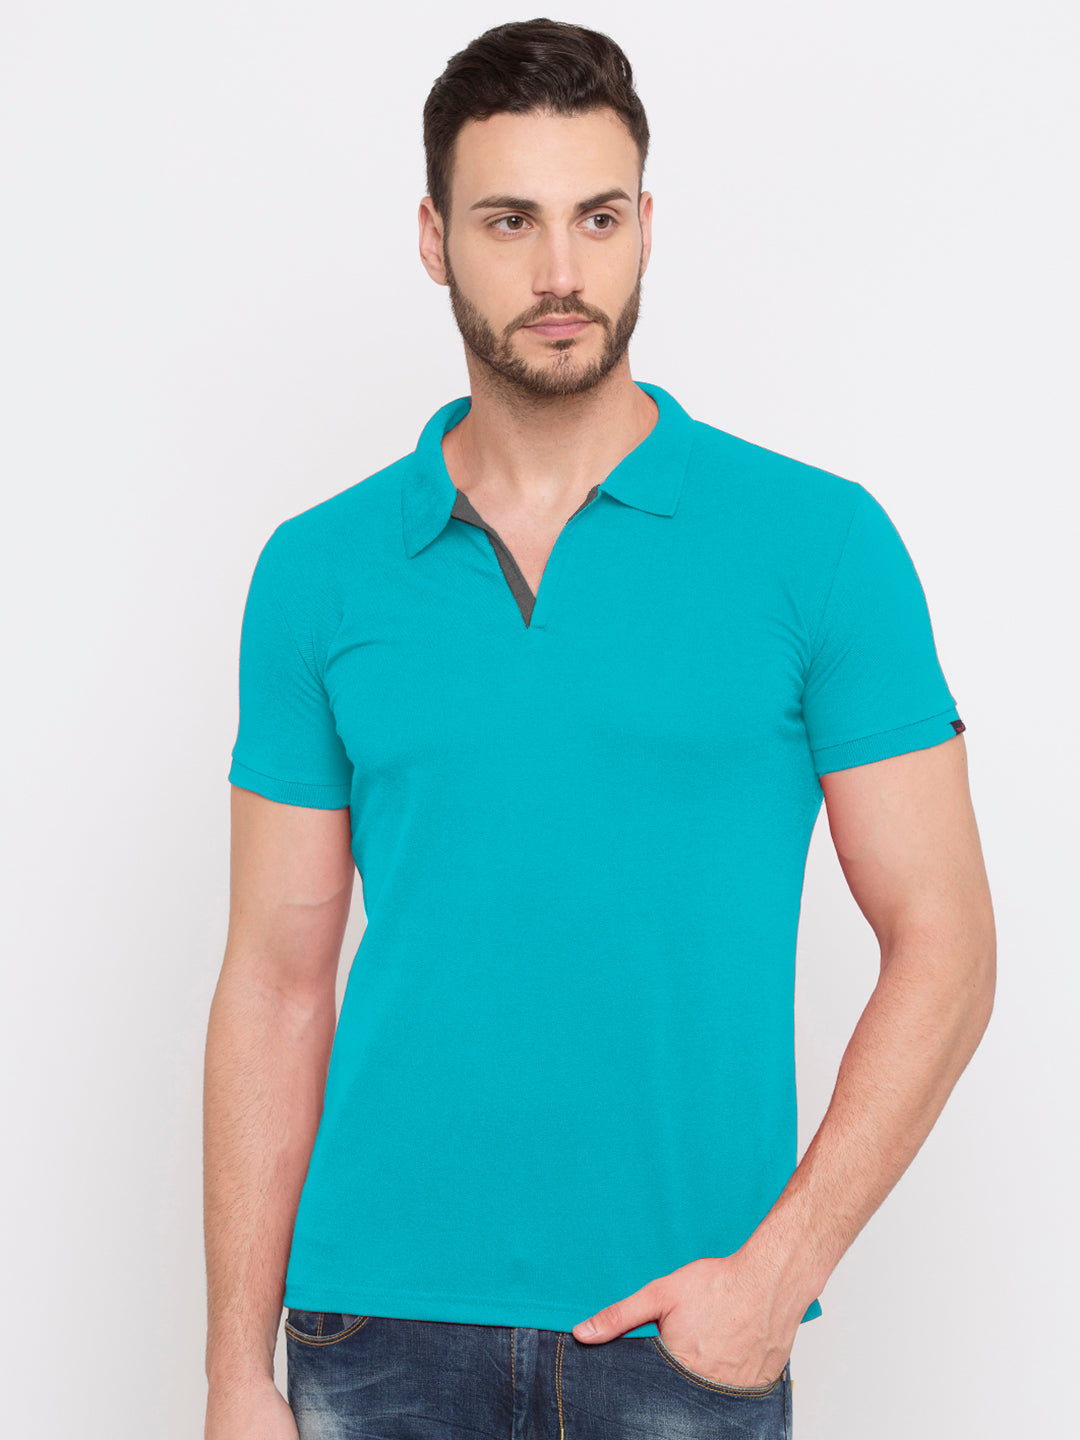 Sea Green polo t shirt